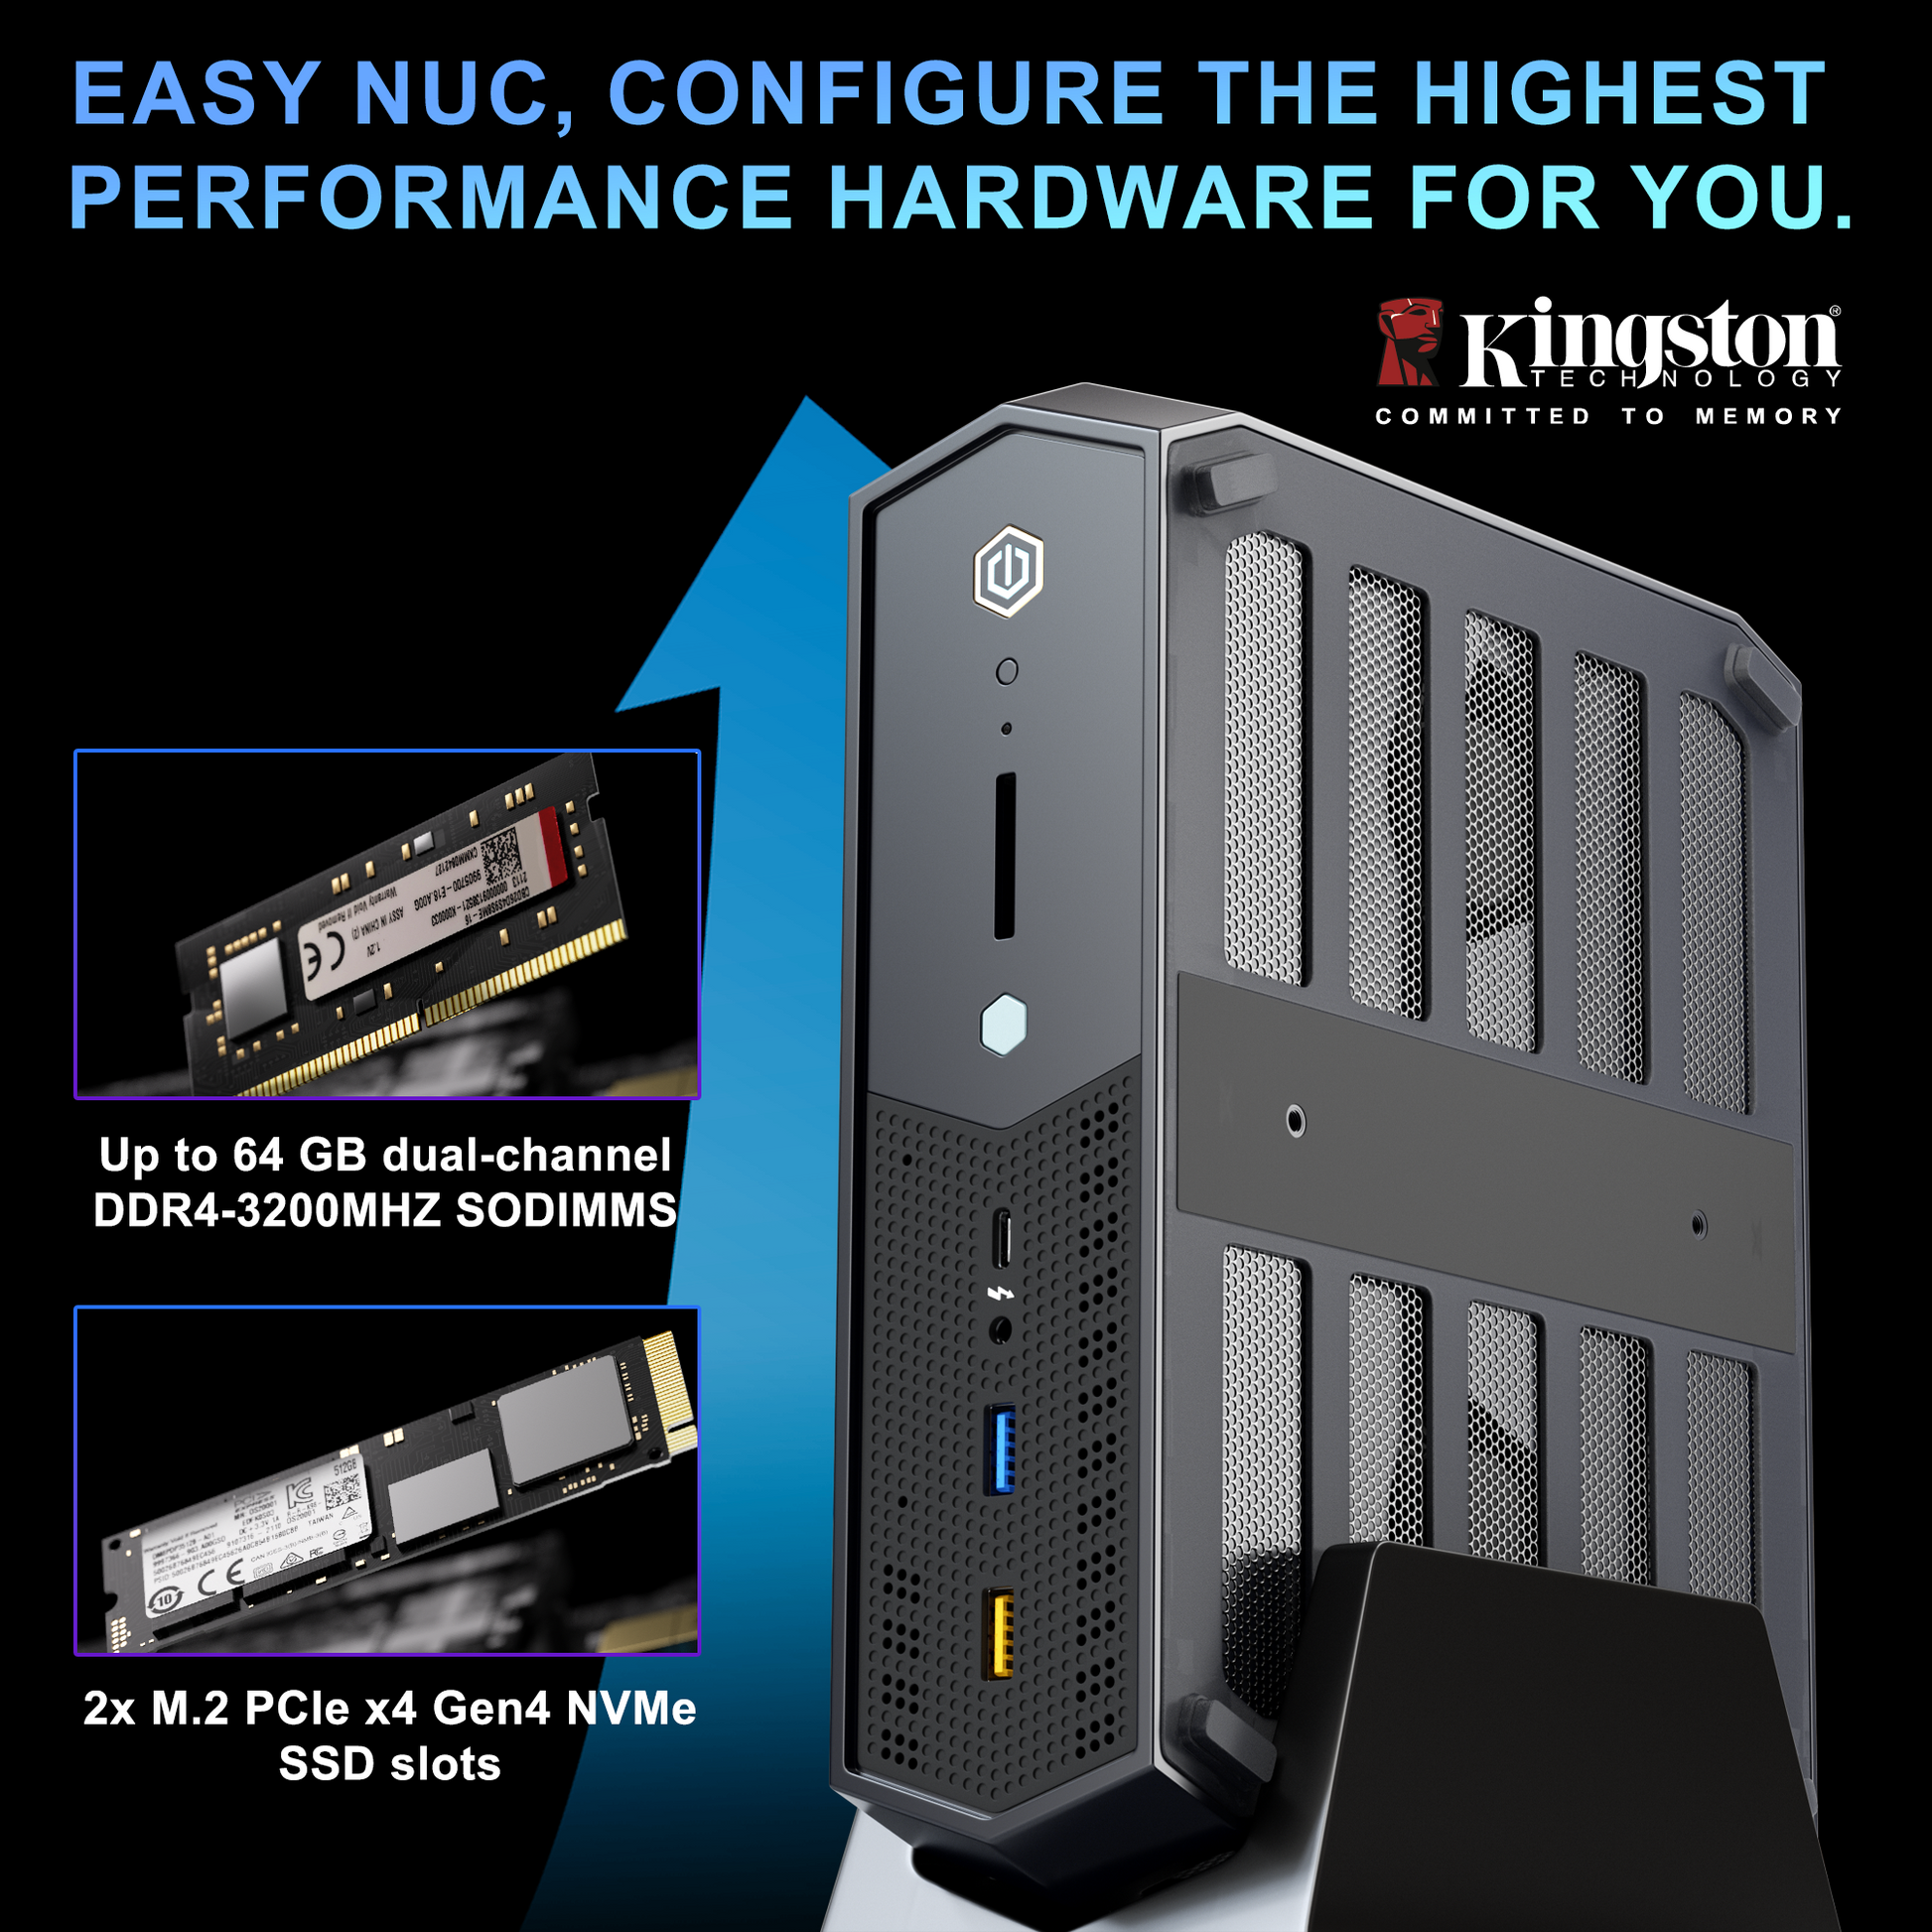 Intel NUC 12 Enthusiast - NUC12SNKI72